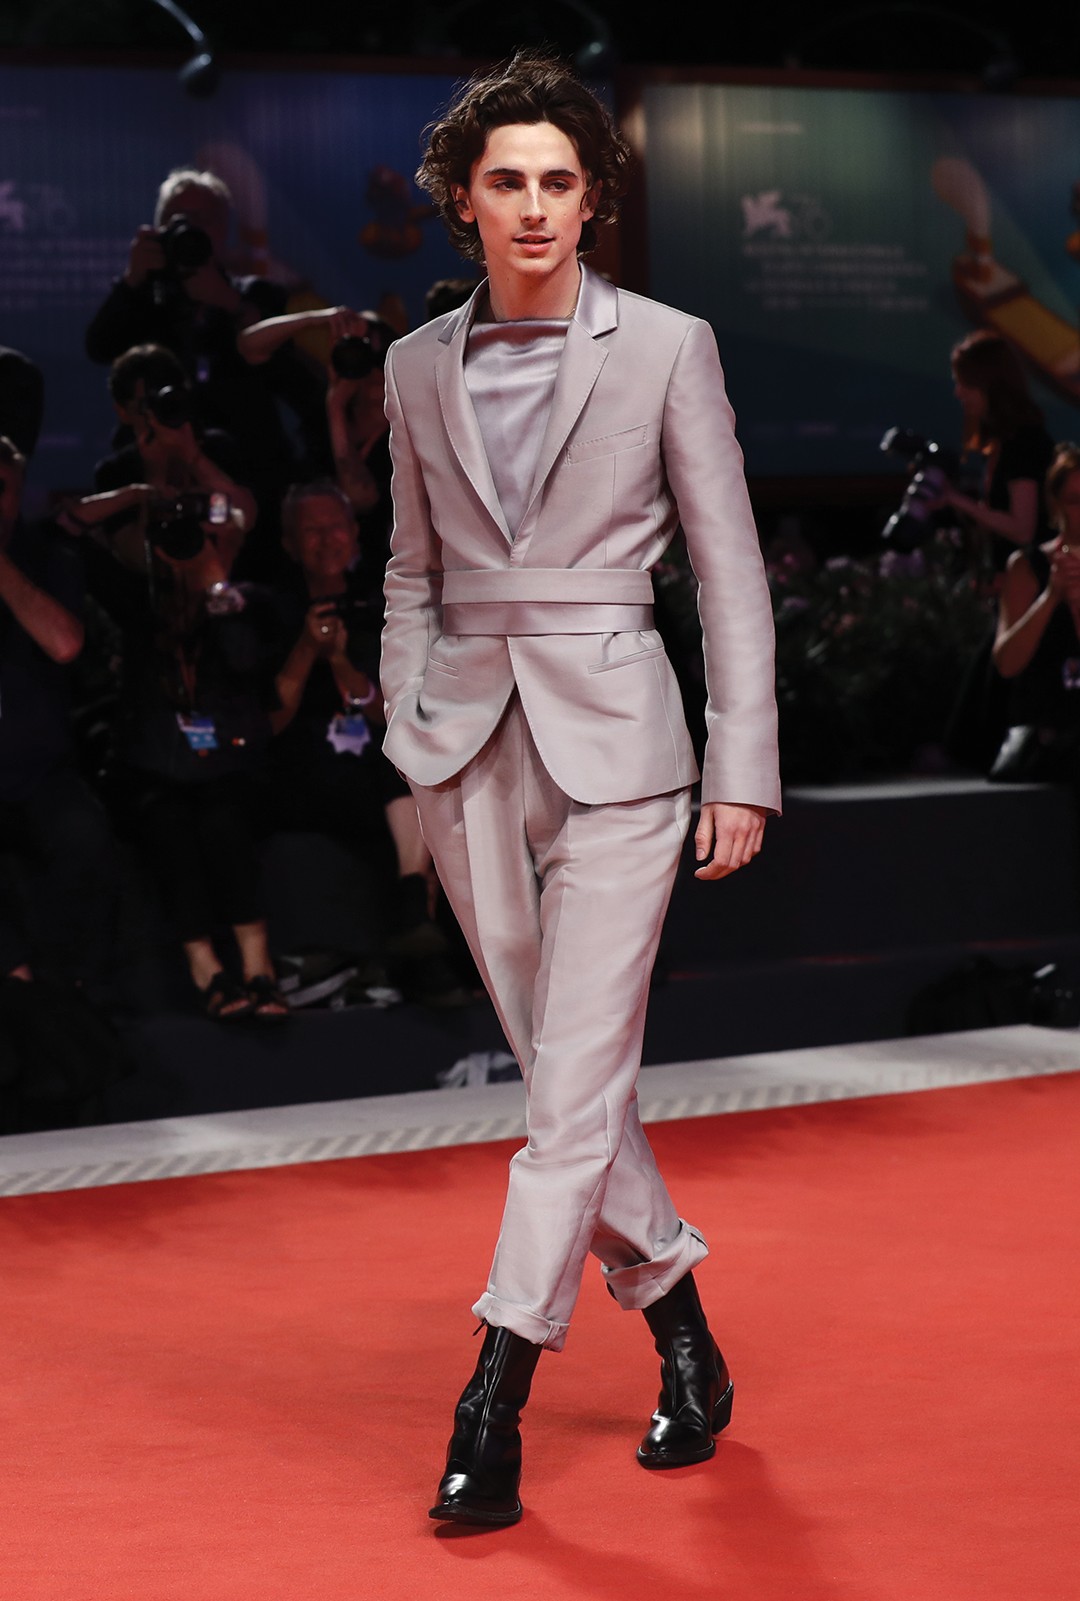 Depois daquele red carpet: O ator Timothée Chalamet roubou a cena no Festival de Veneza 2019 na estreia de The King (Netflix) (Foto: Getty Images)